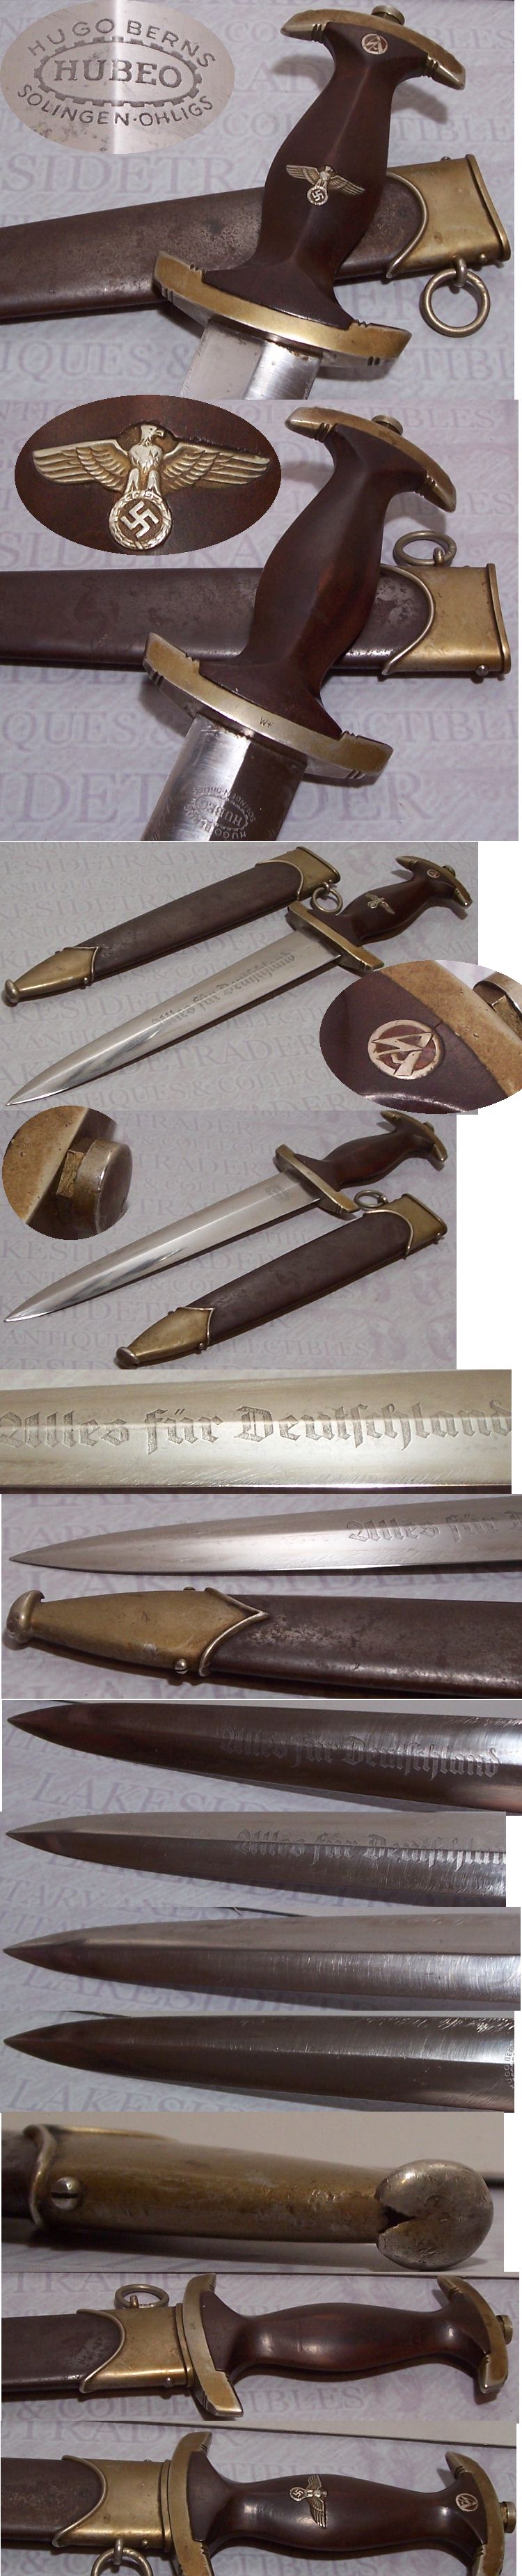 Early SA Dagger by Hubeo